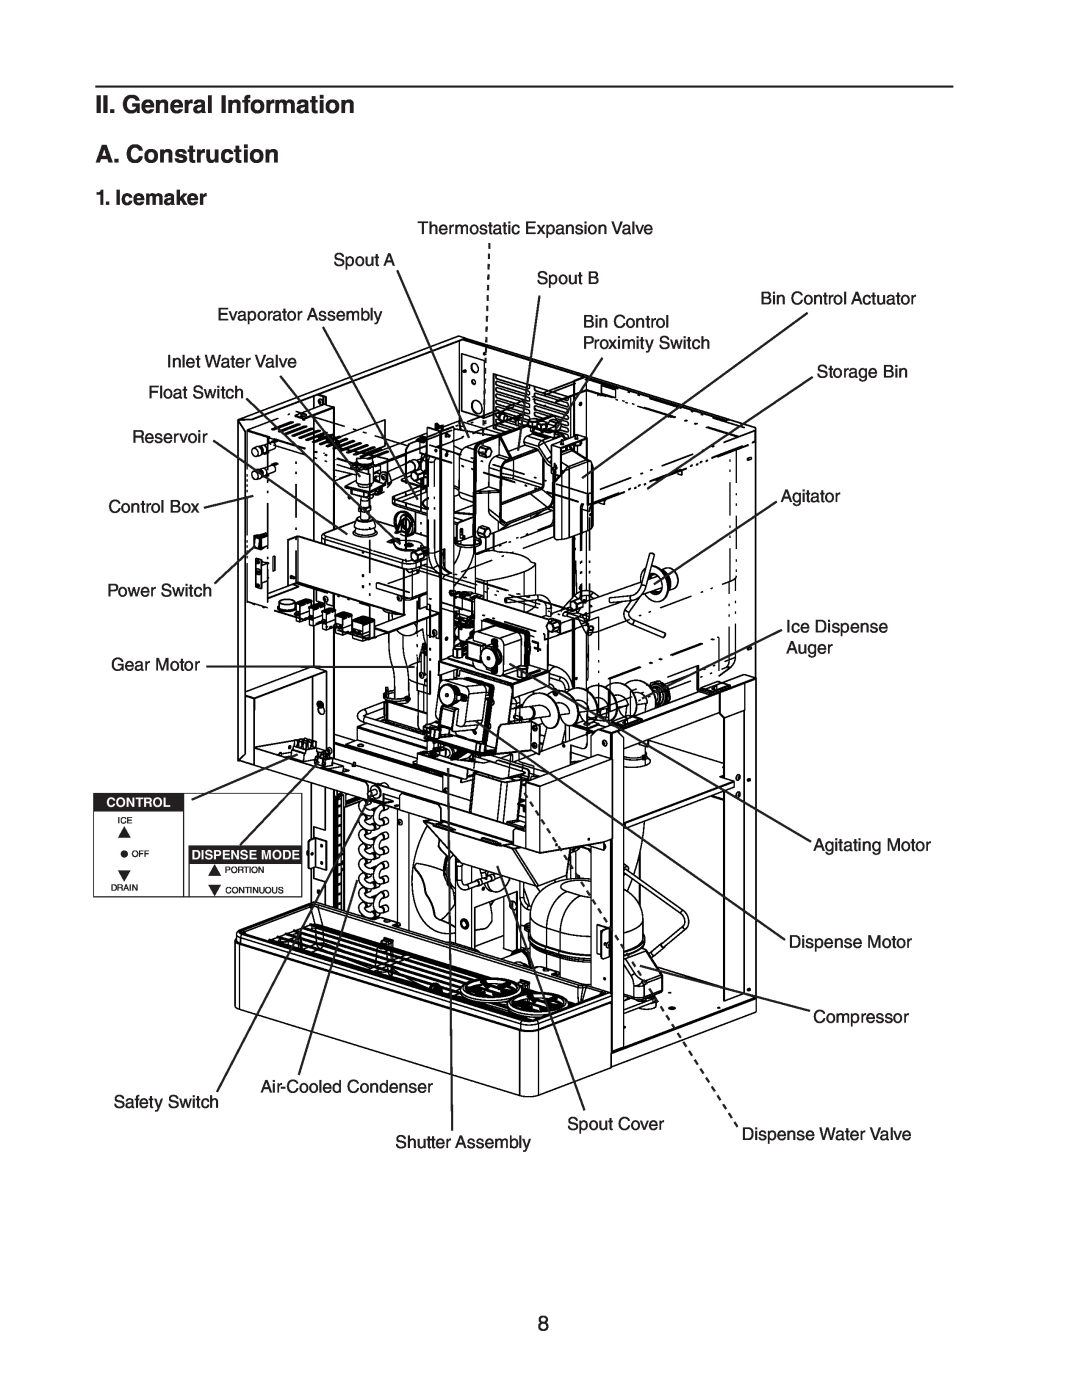 Hoshizaki DCM 300BAH(-OS) service manual II. General Information A. Construction, Icemaker 